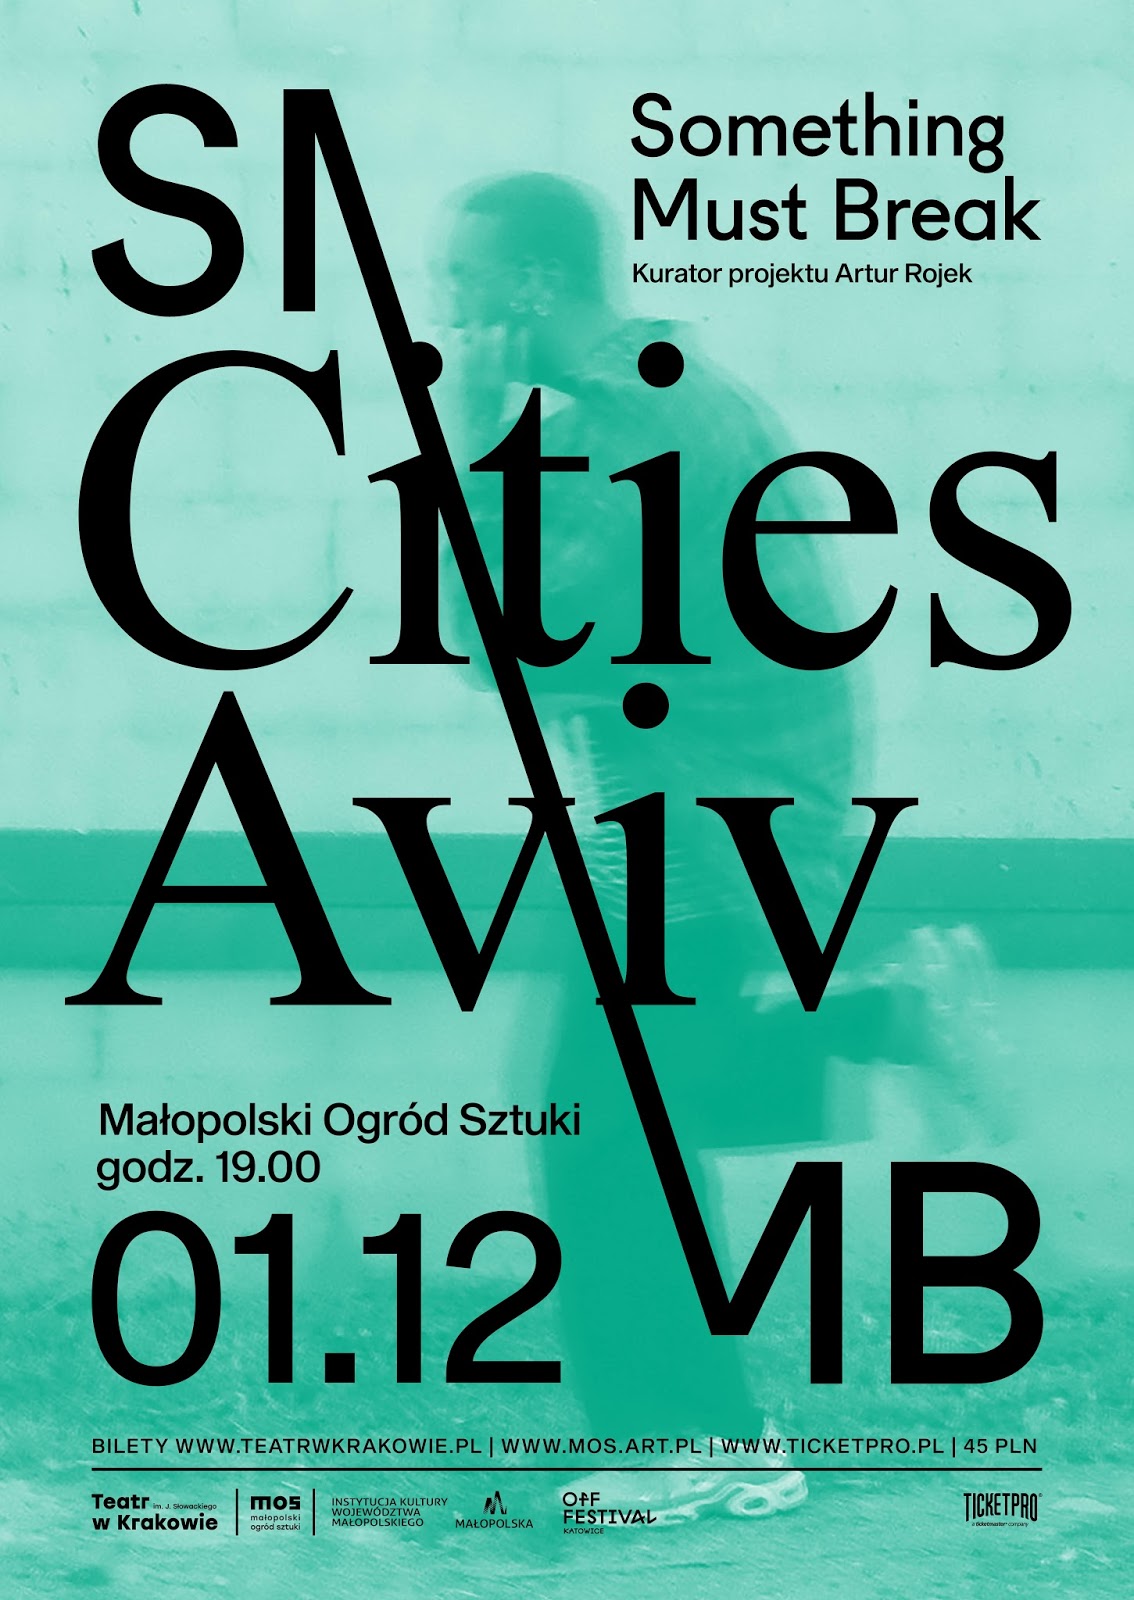 Cities Aviv (źródło: materiał prasowe organizatora)